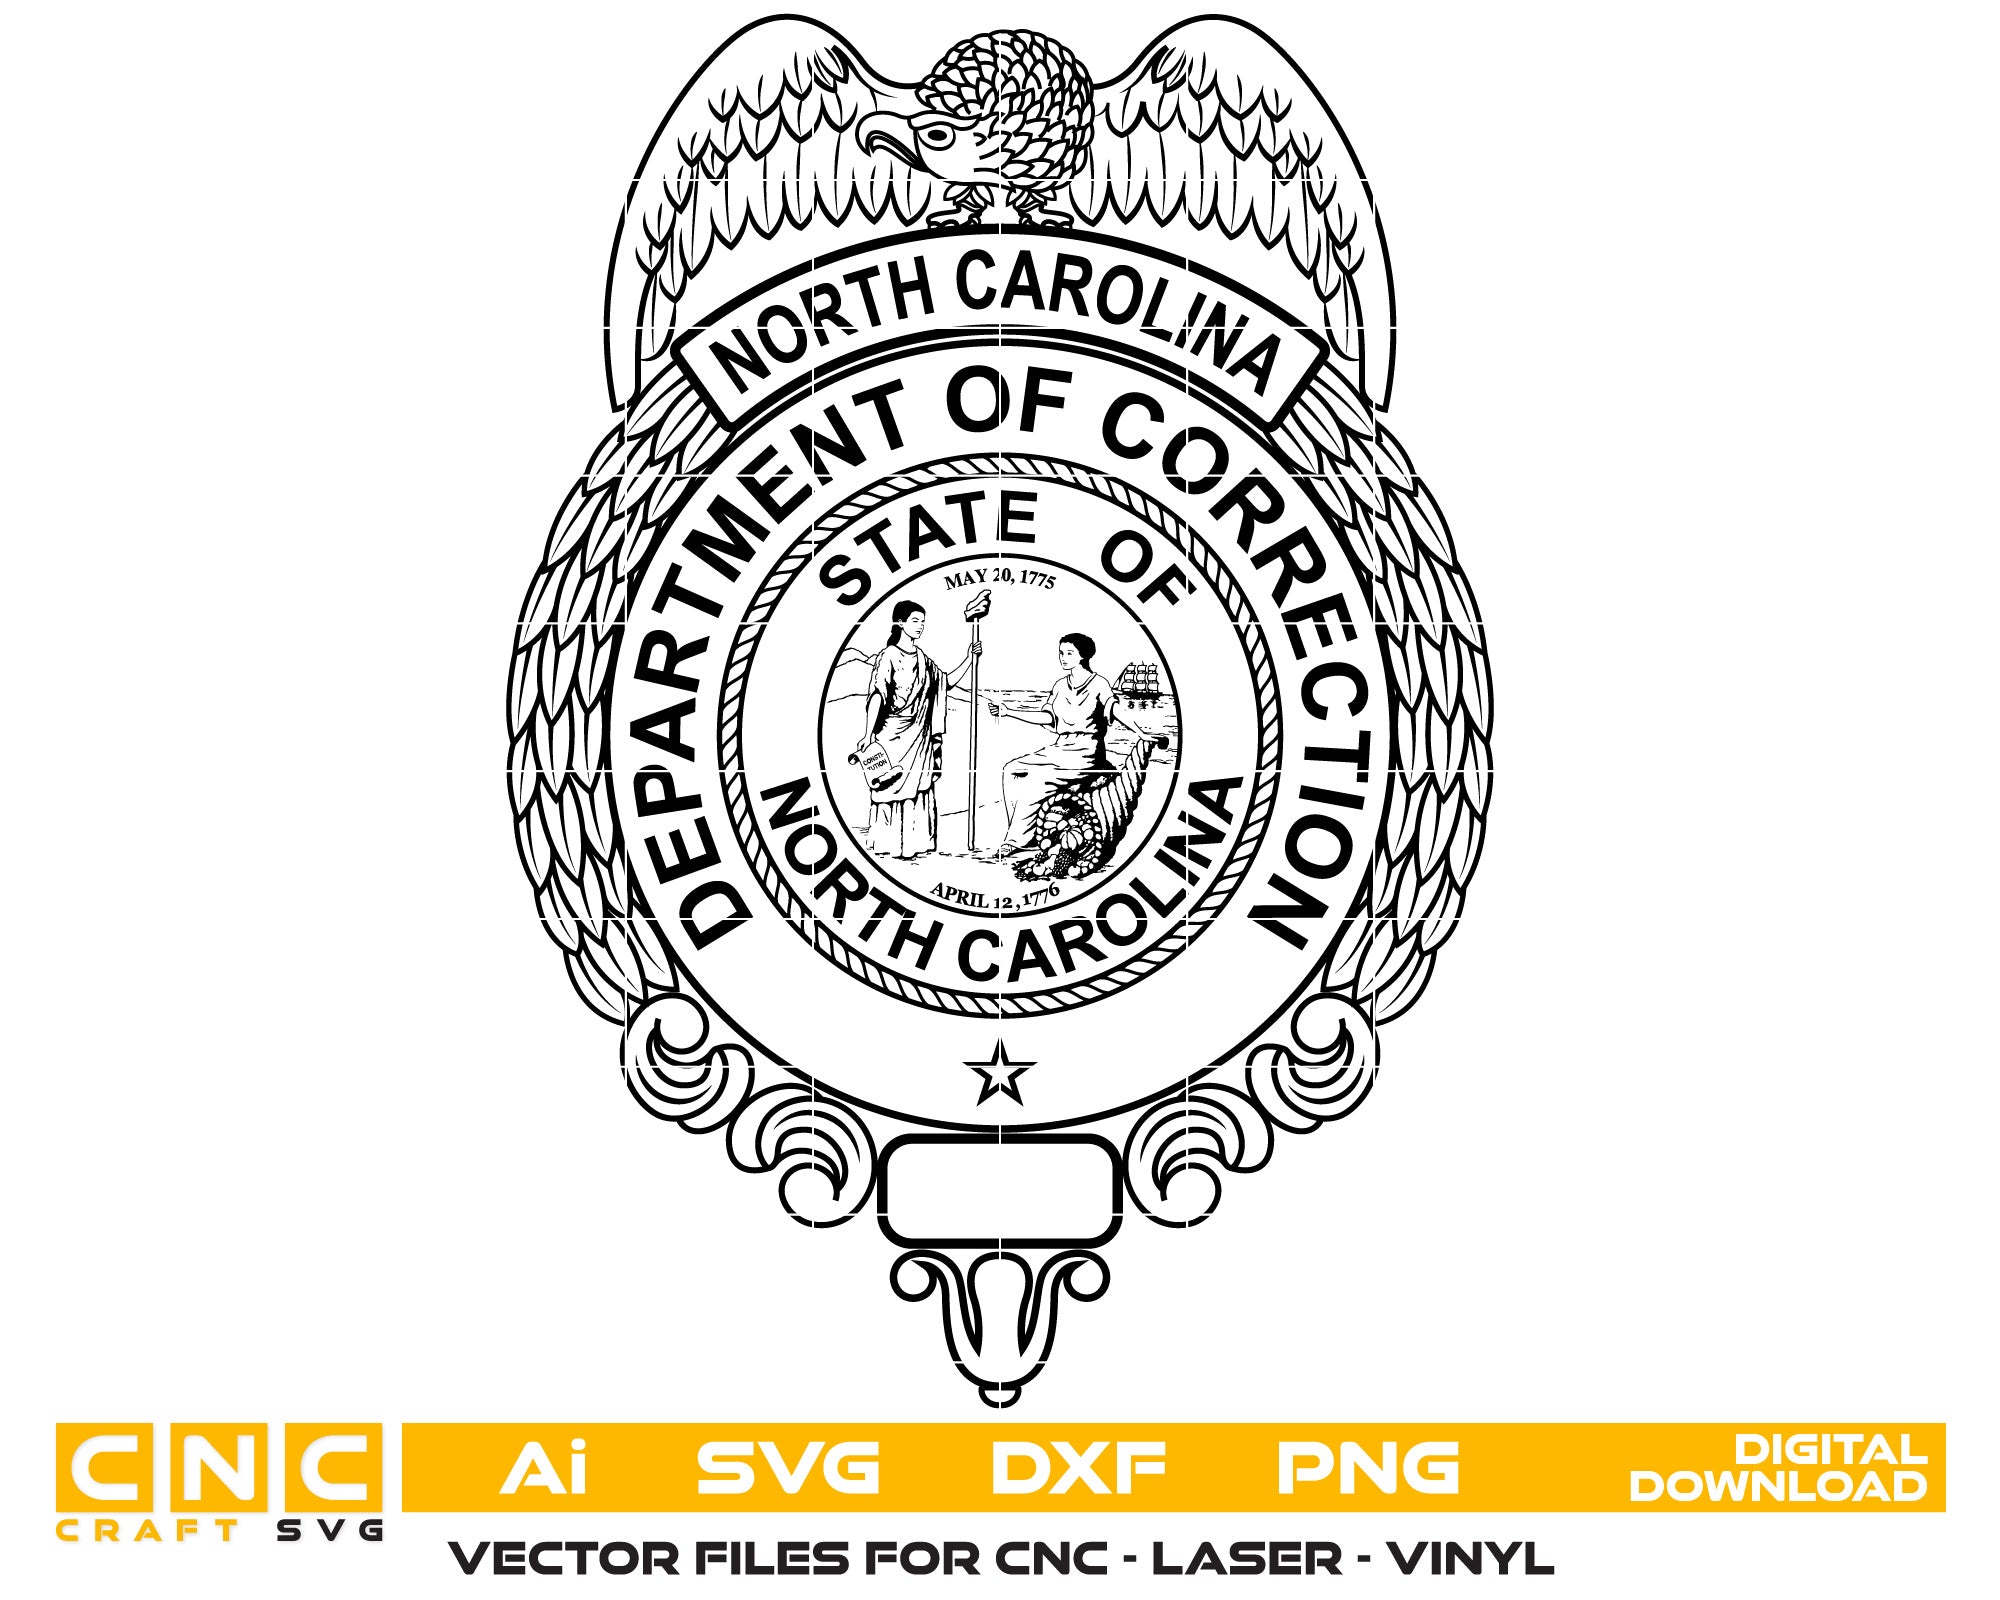 North Carolina Department of Correction Badge Vector Art, Ai,SVG, DXF, PNG, Digital Files